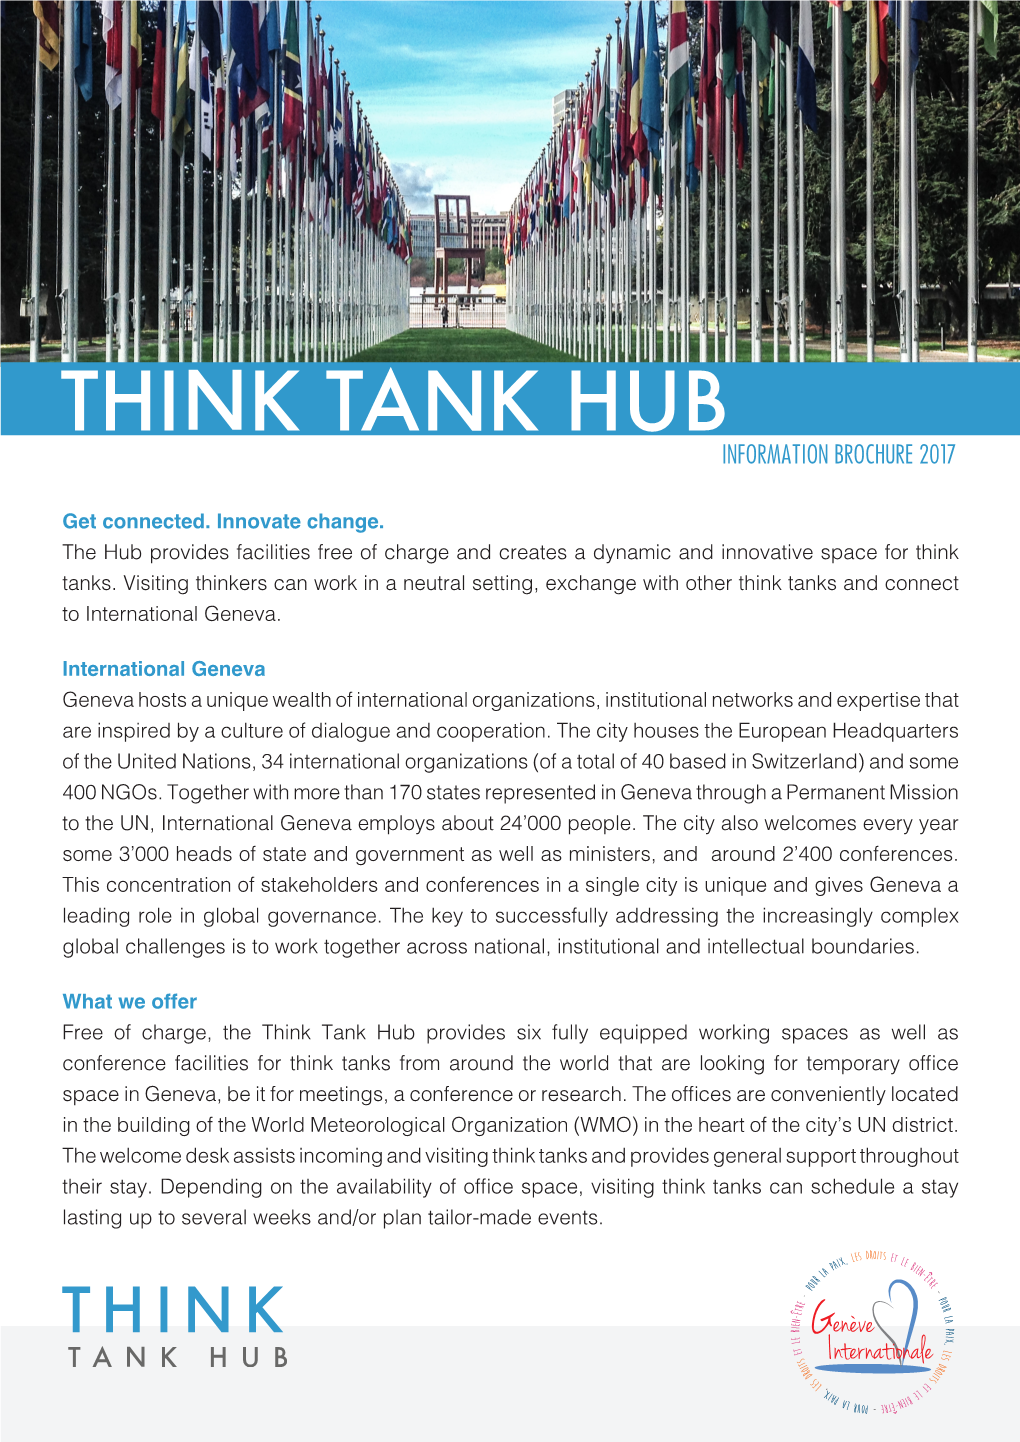 Think Tank Hub Details